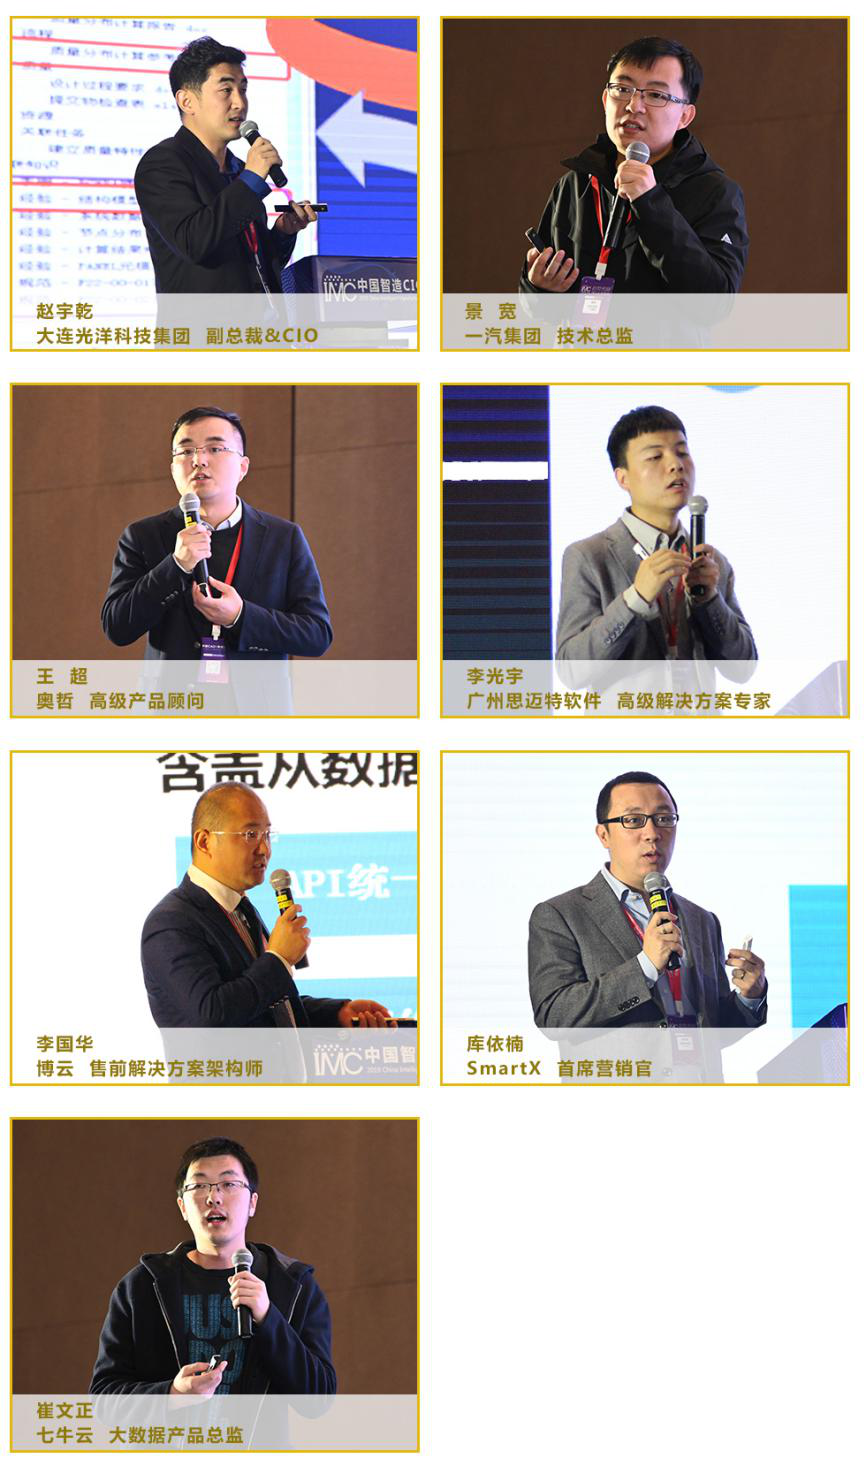 IMC 2019中国智造CIO年会在苏州圆满落幕！